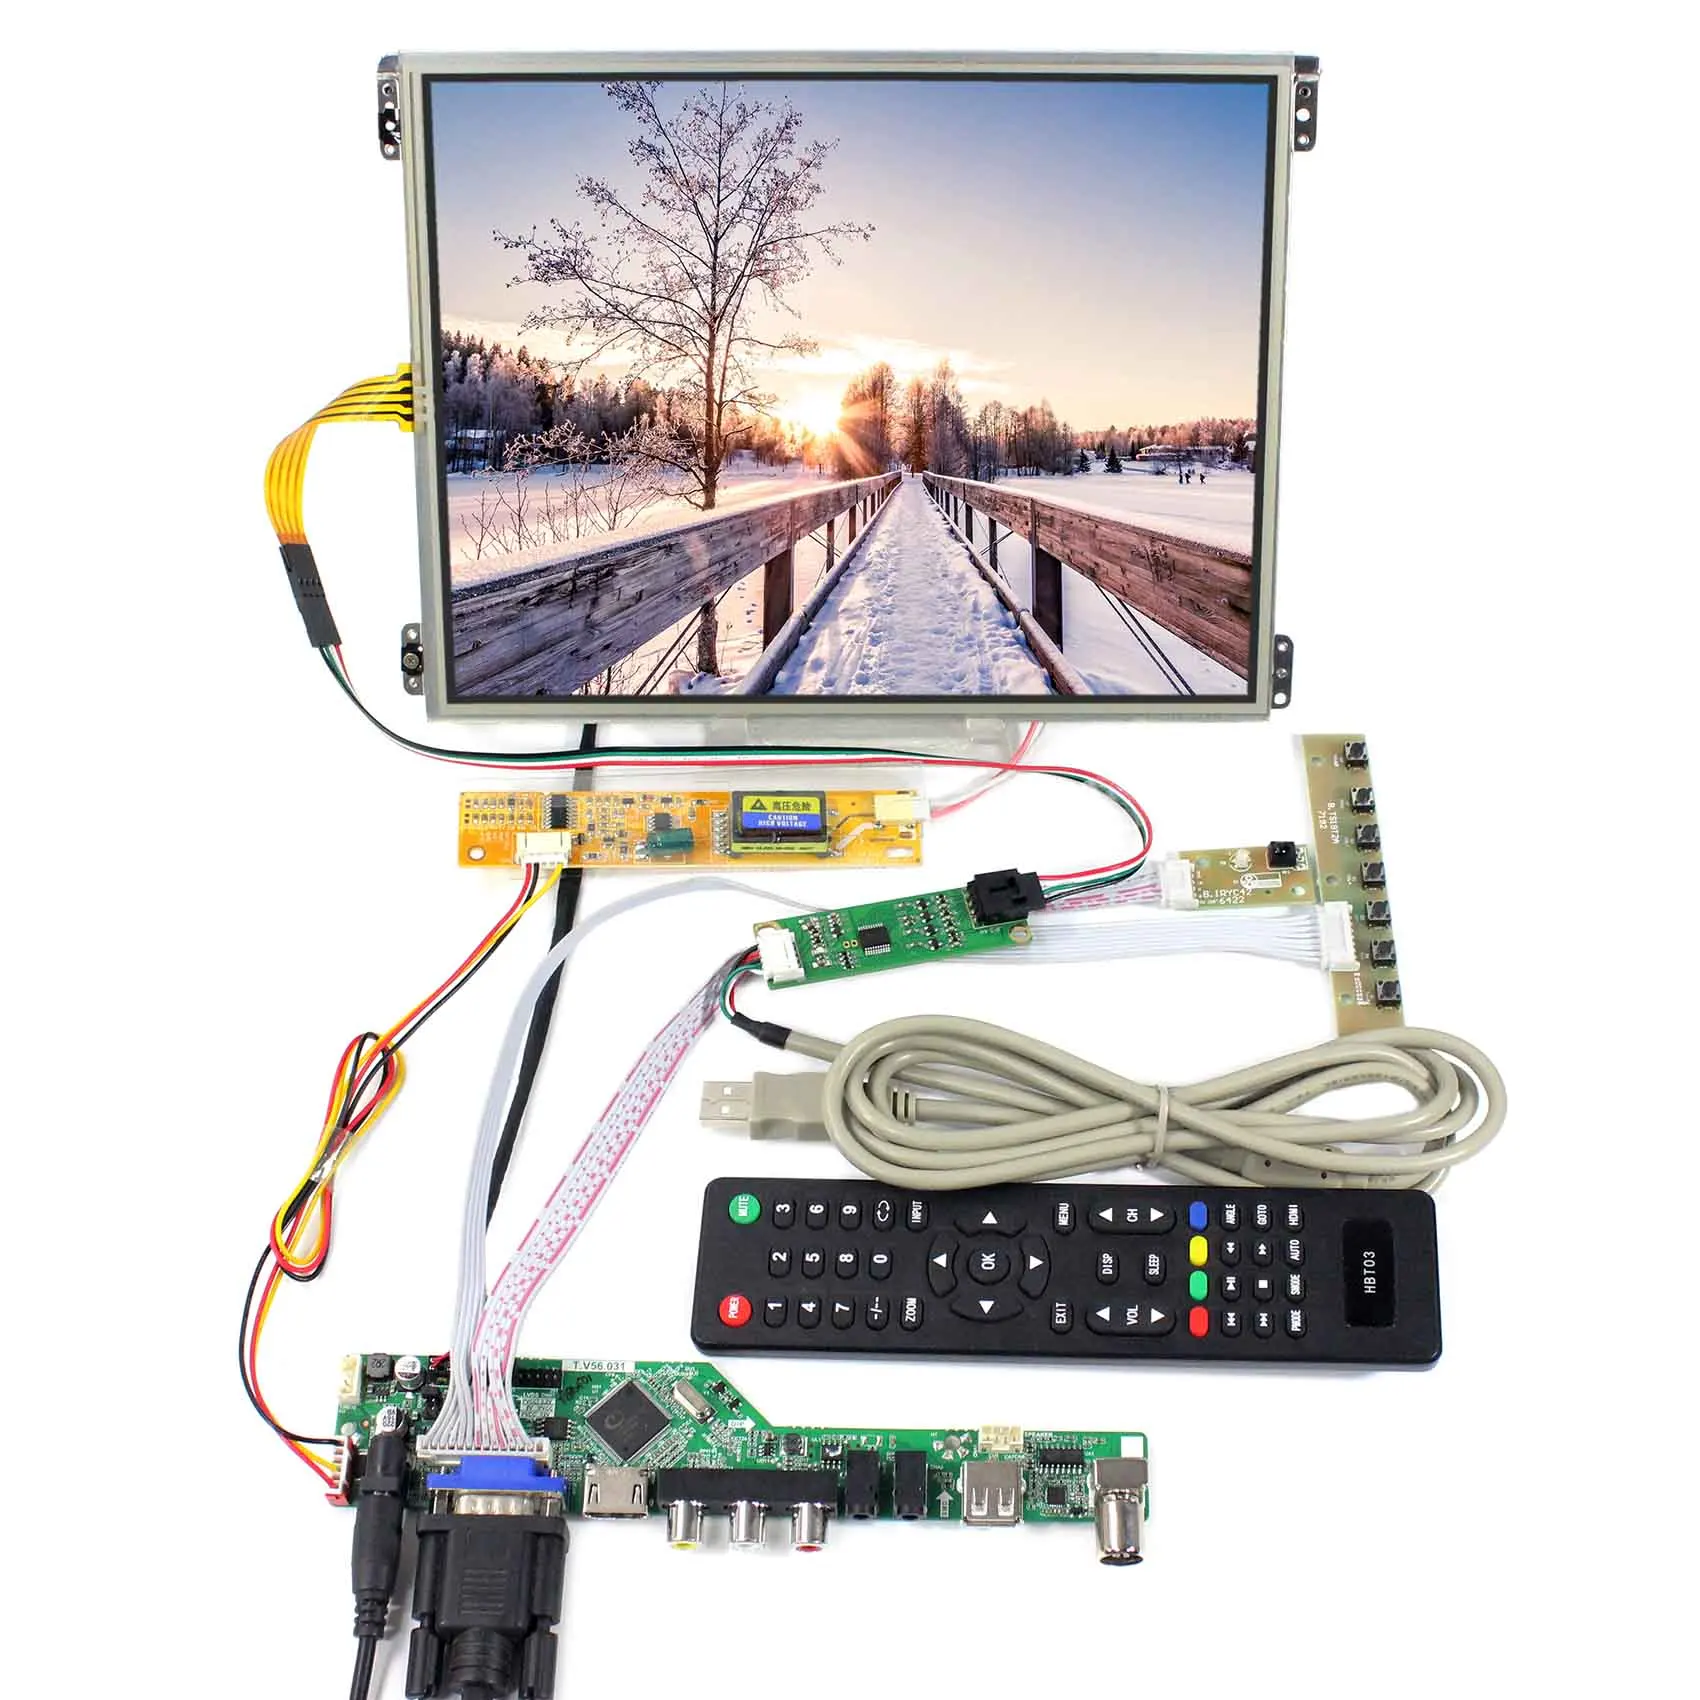 

HD MI VGA AV USB RF LCD Board Work with 10.4inch 1024X768 IPS LCD Screen HT10X21-311 With Touch Panel